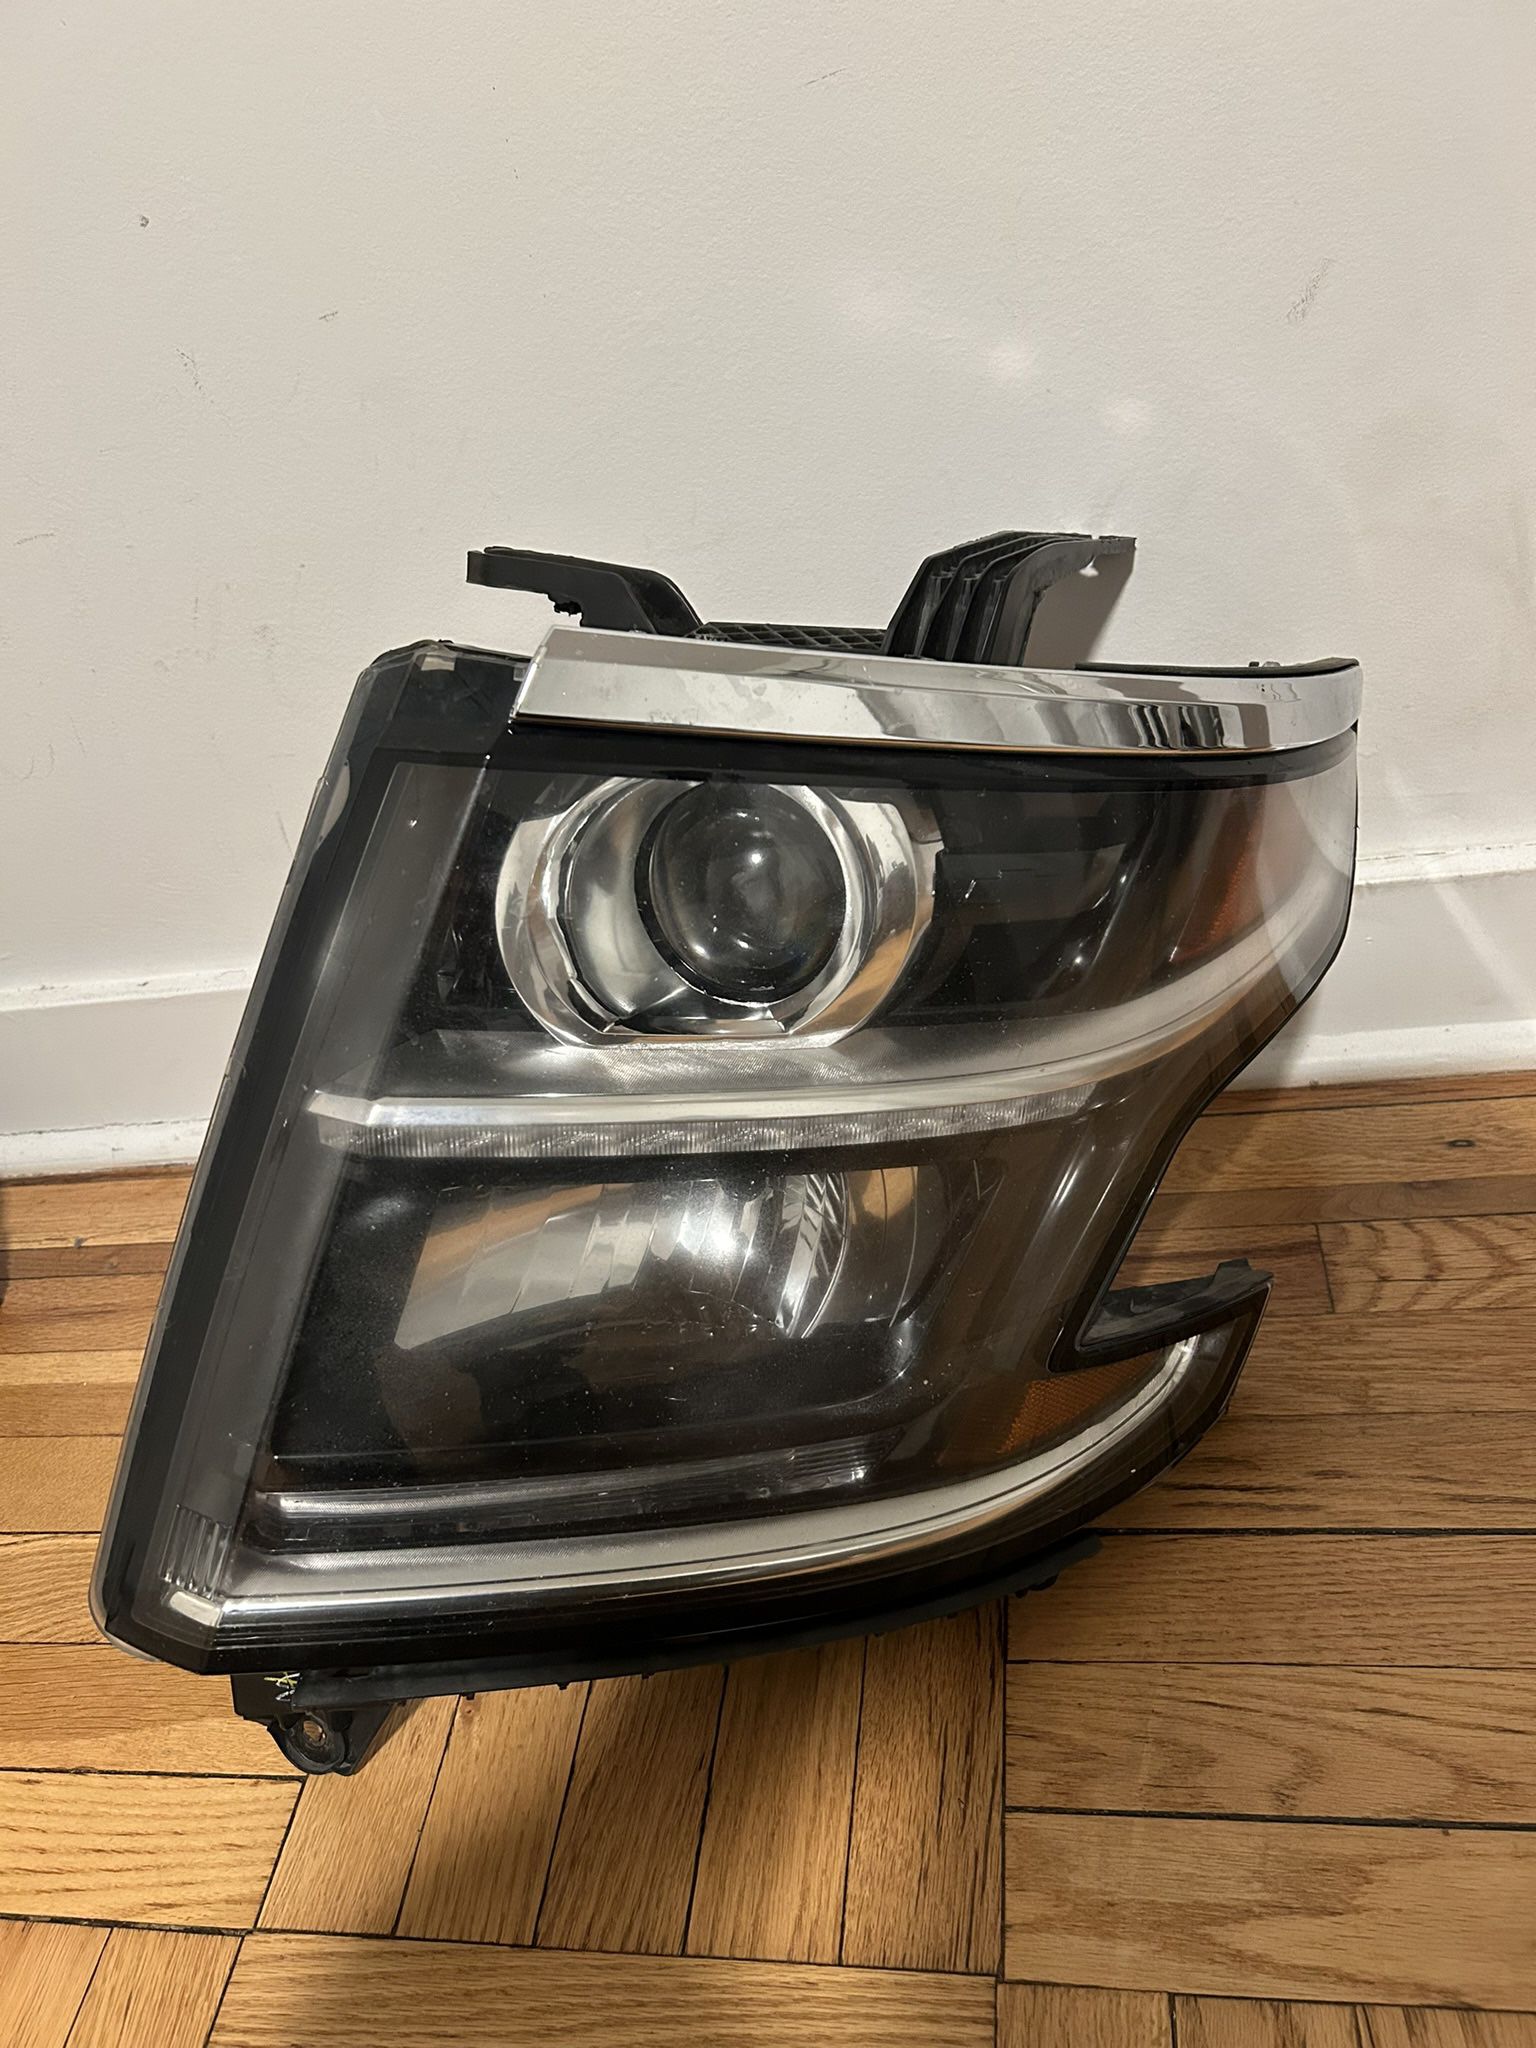 Chevrolet Suburban Headlight